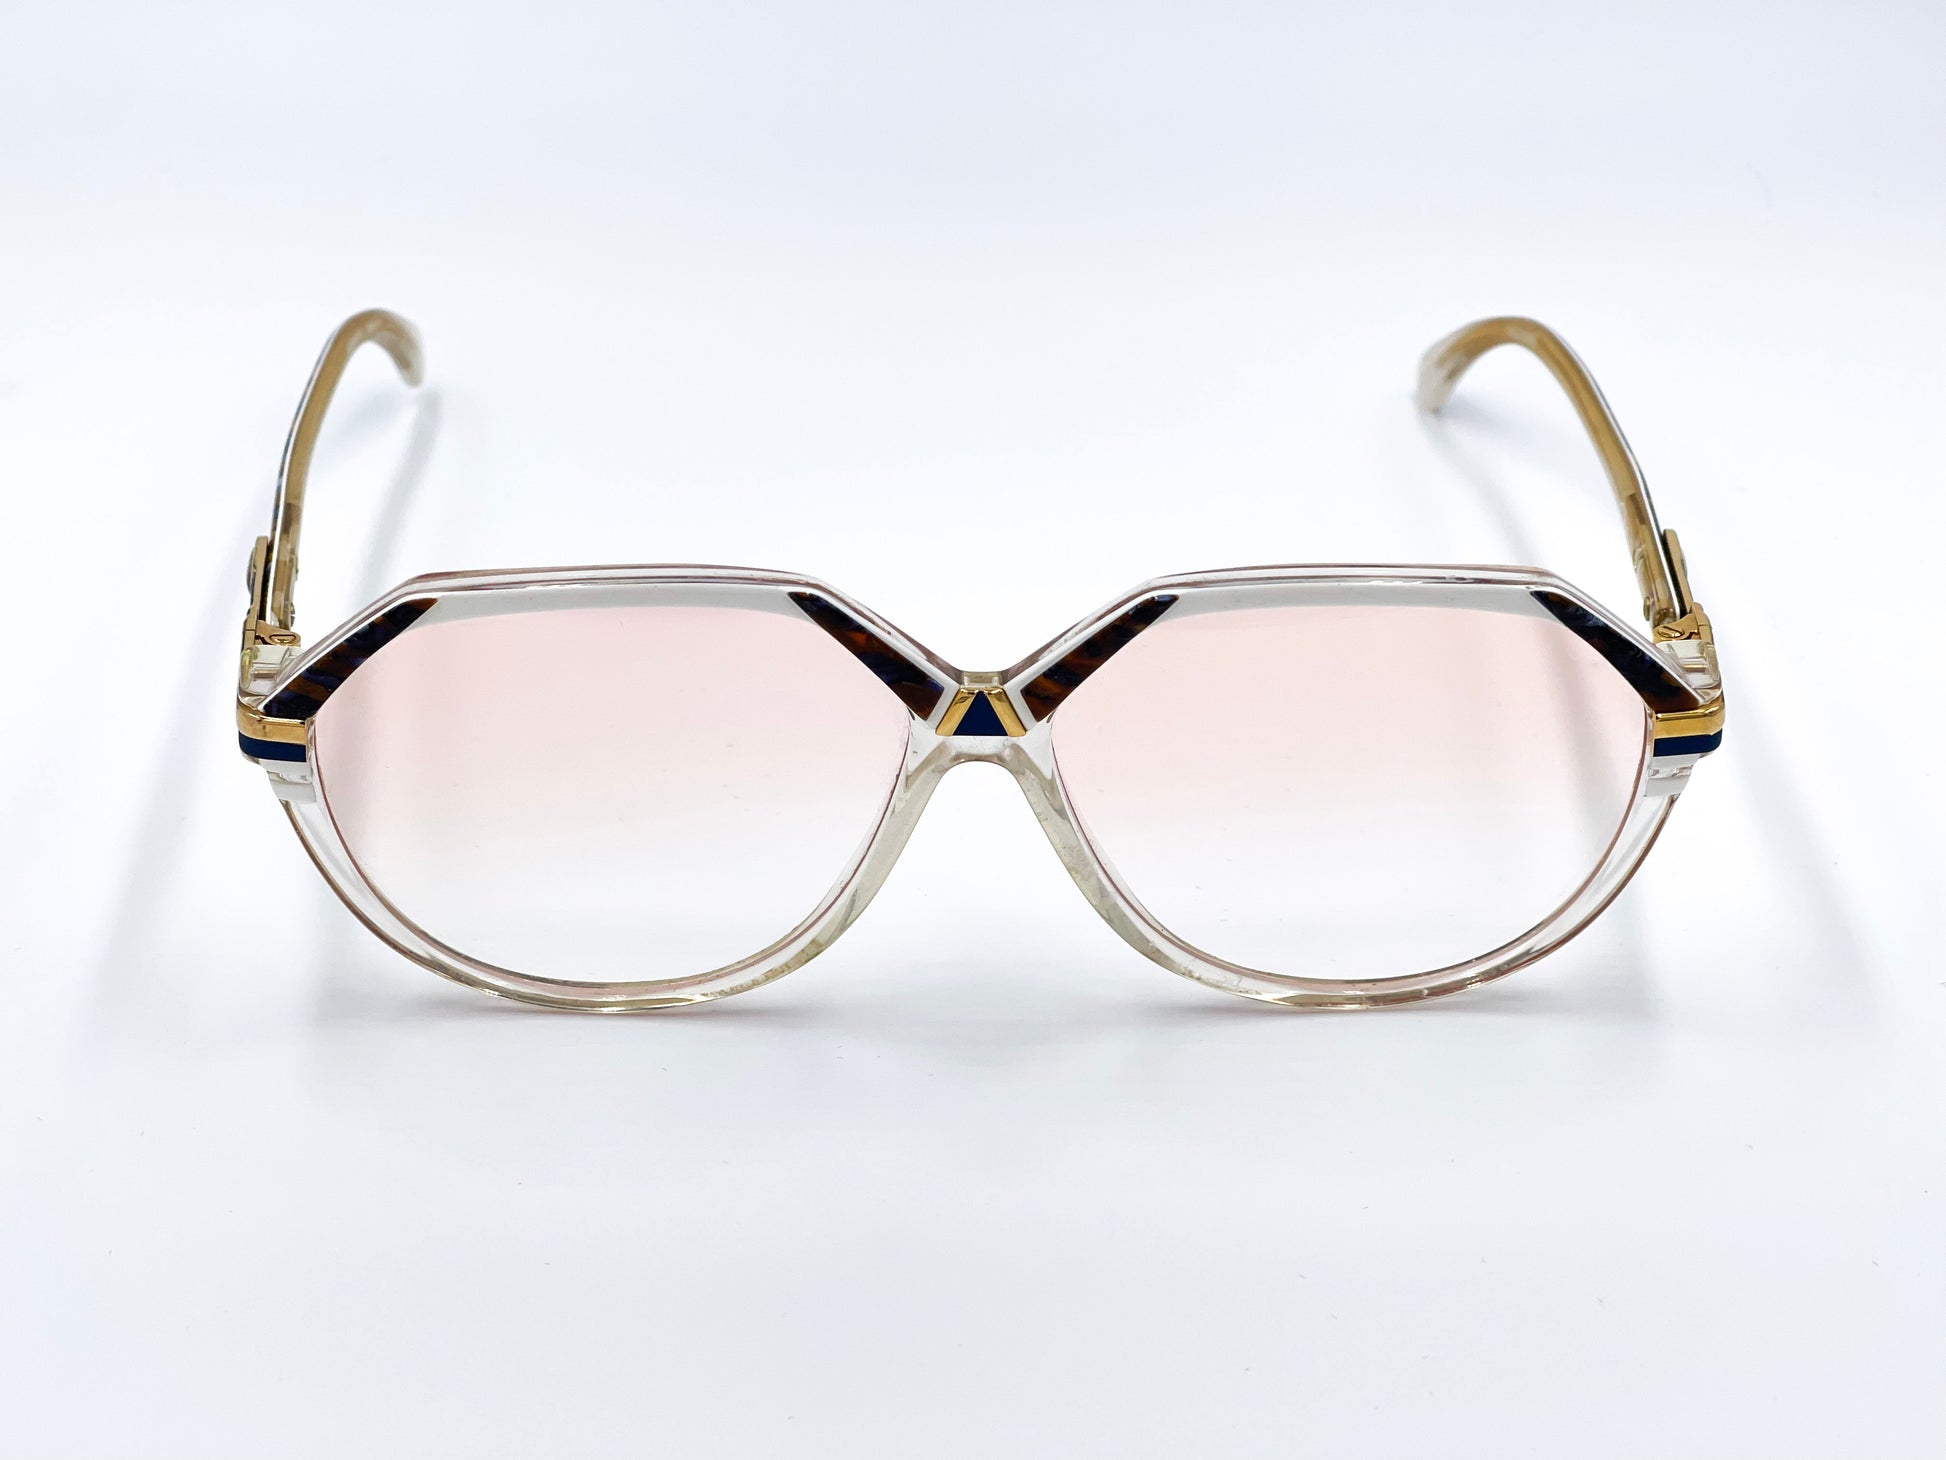 Vintage Christian Dior Sunglasses Model 2520